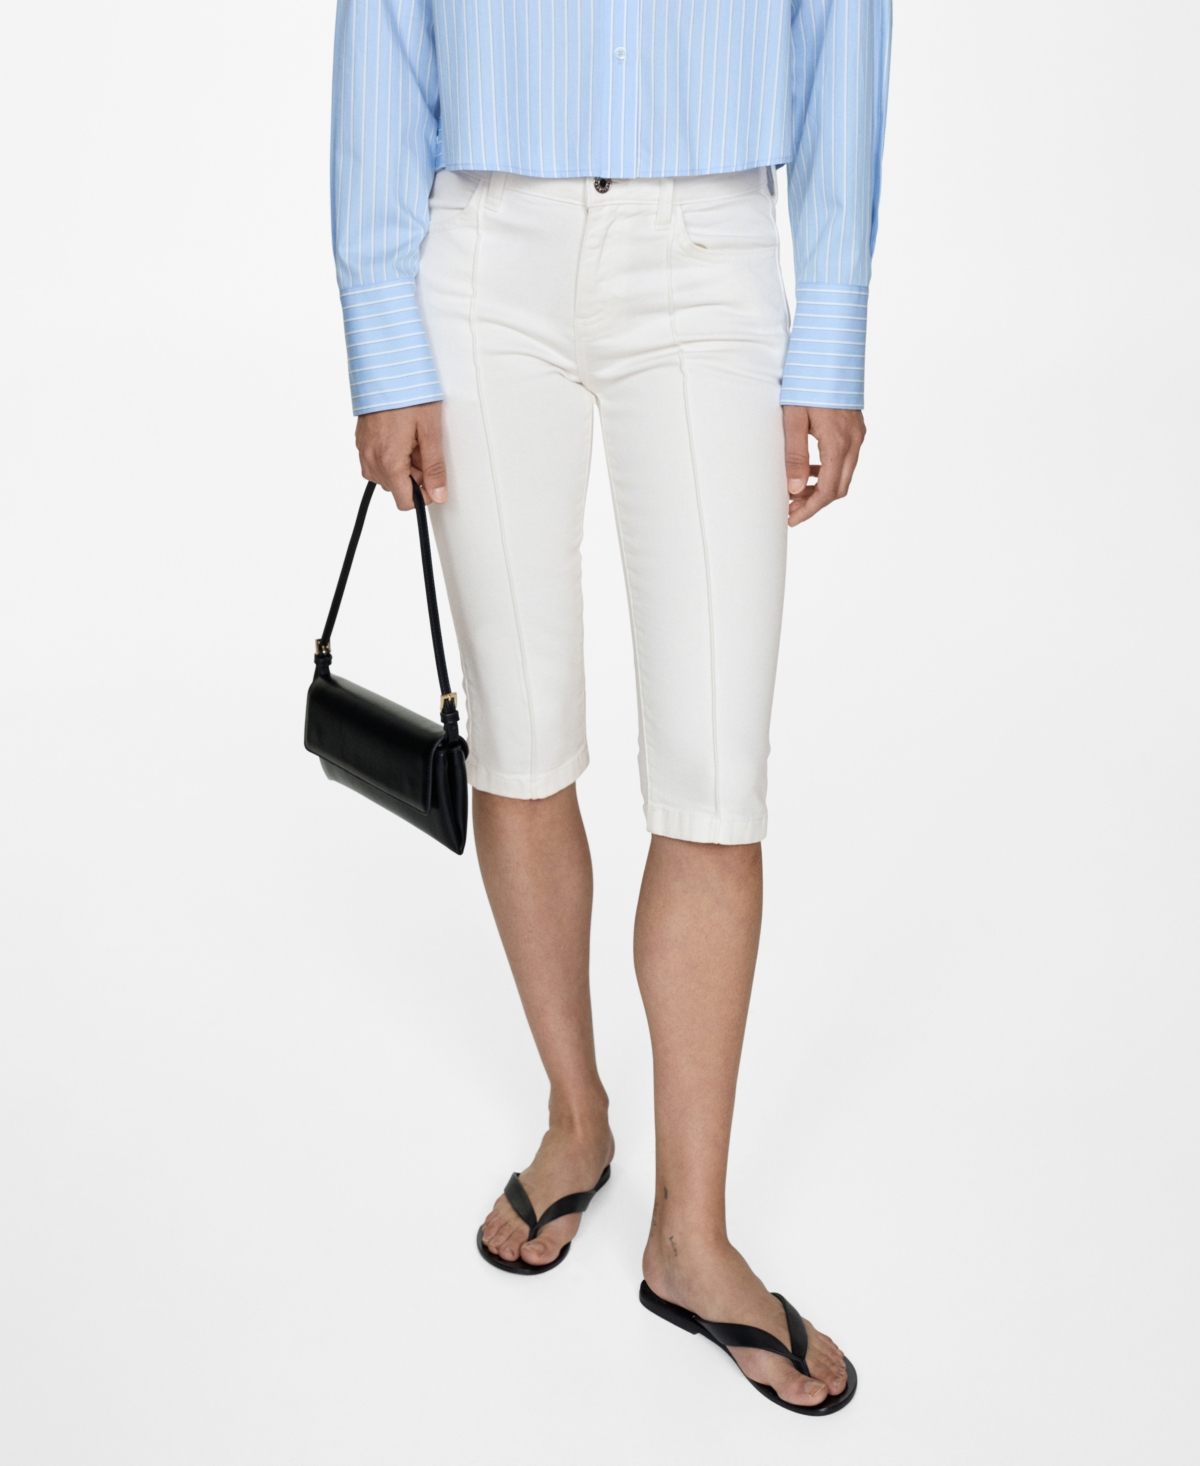 Women's Decorative Stitching Slim Capri Jeans - Off White